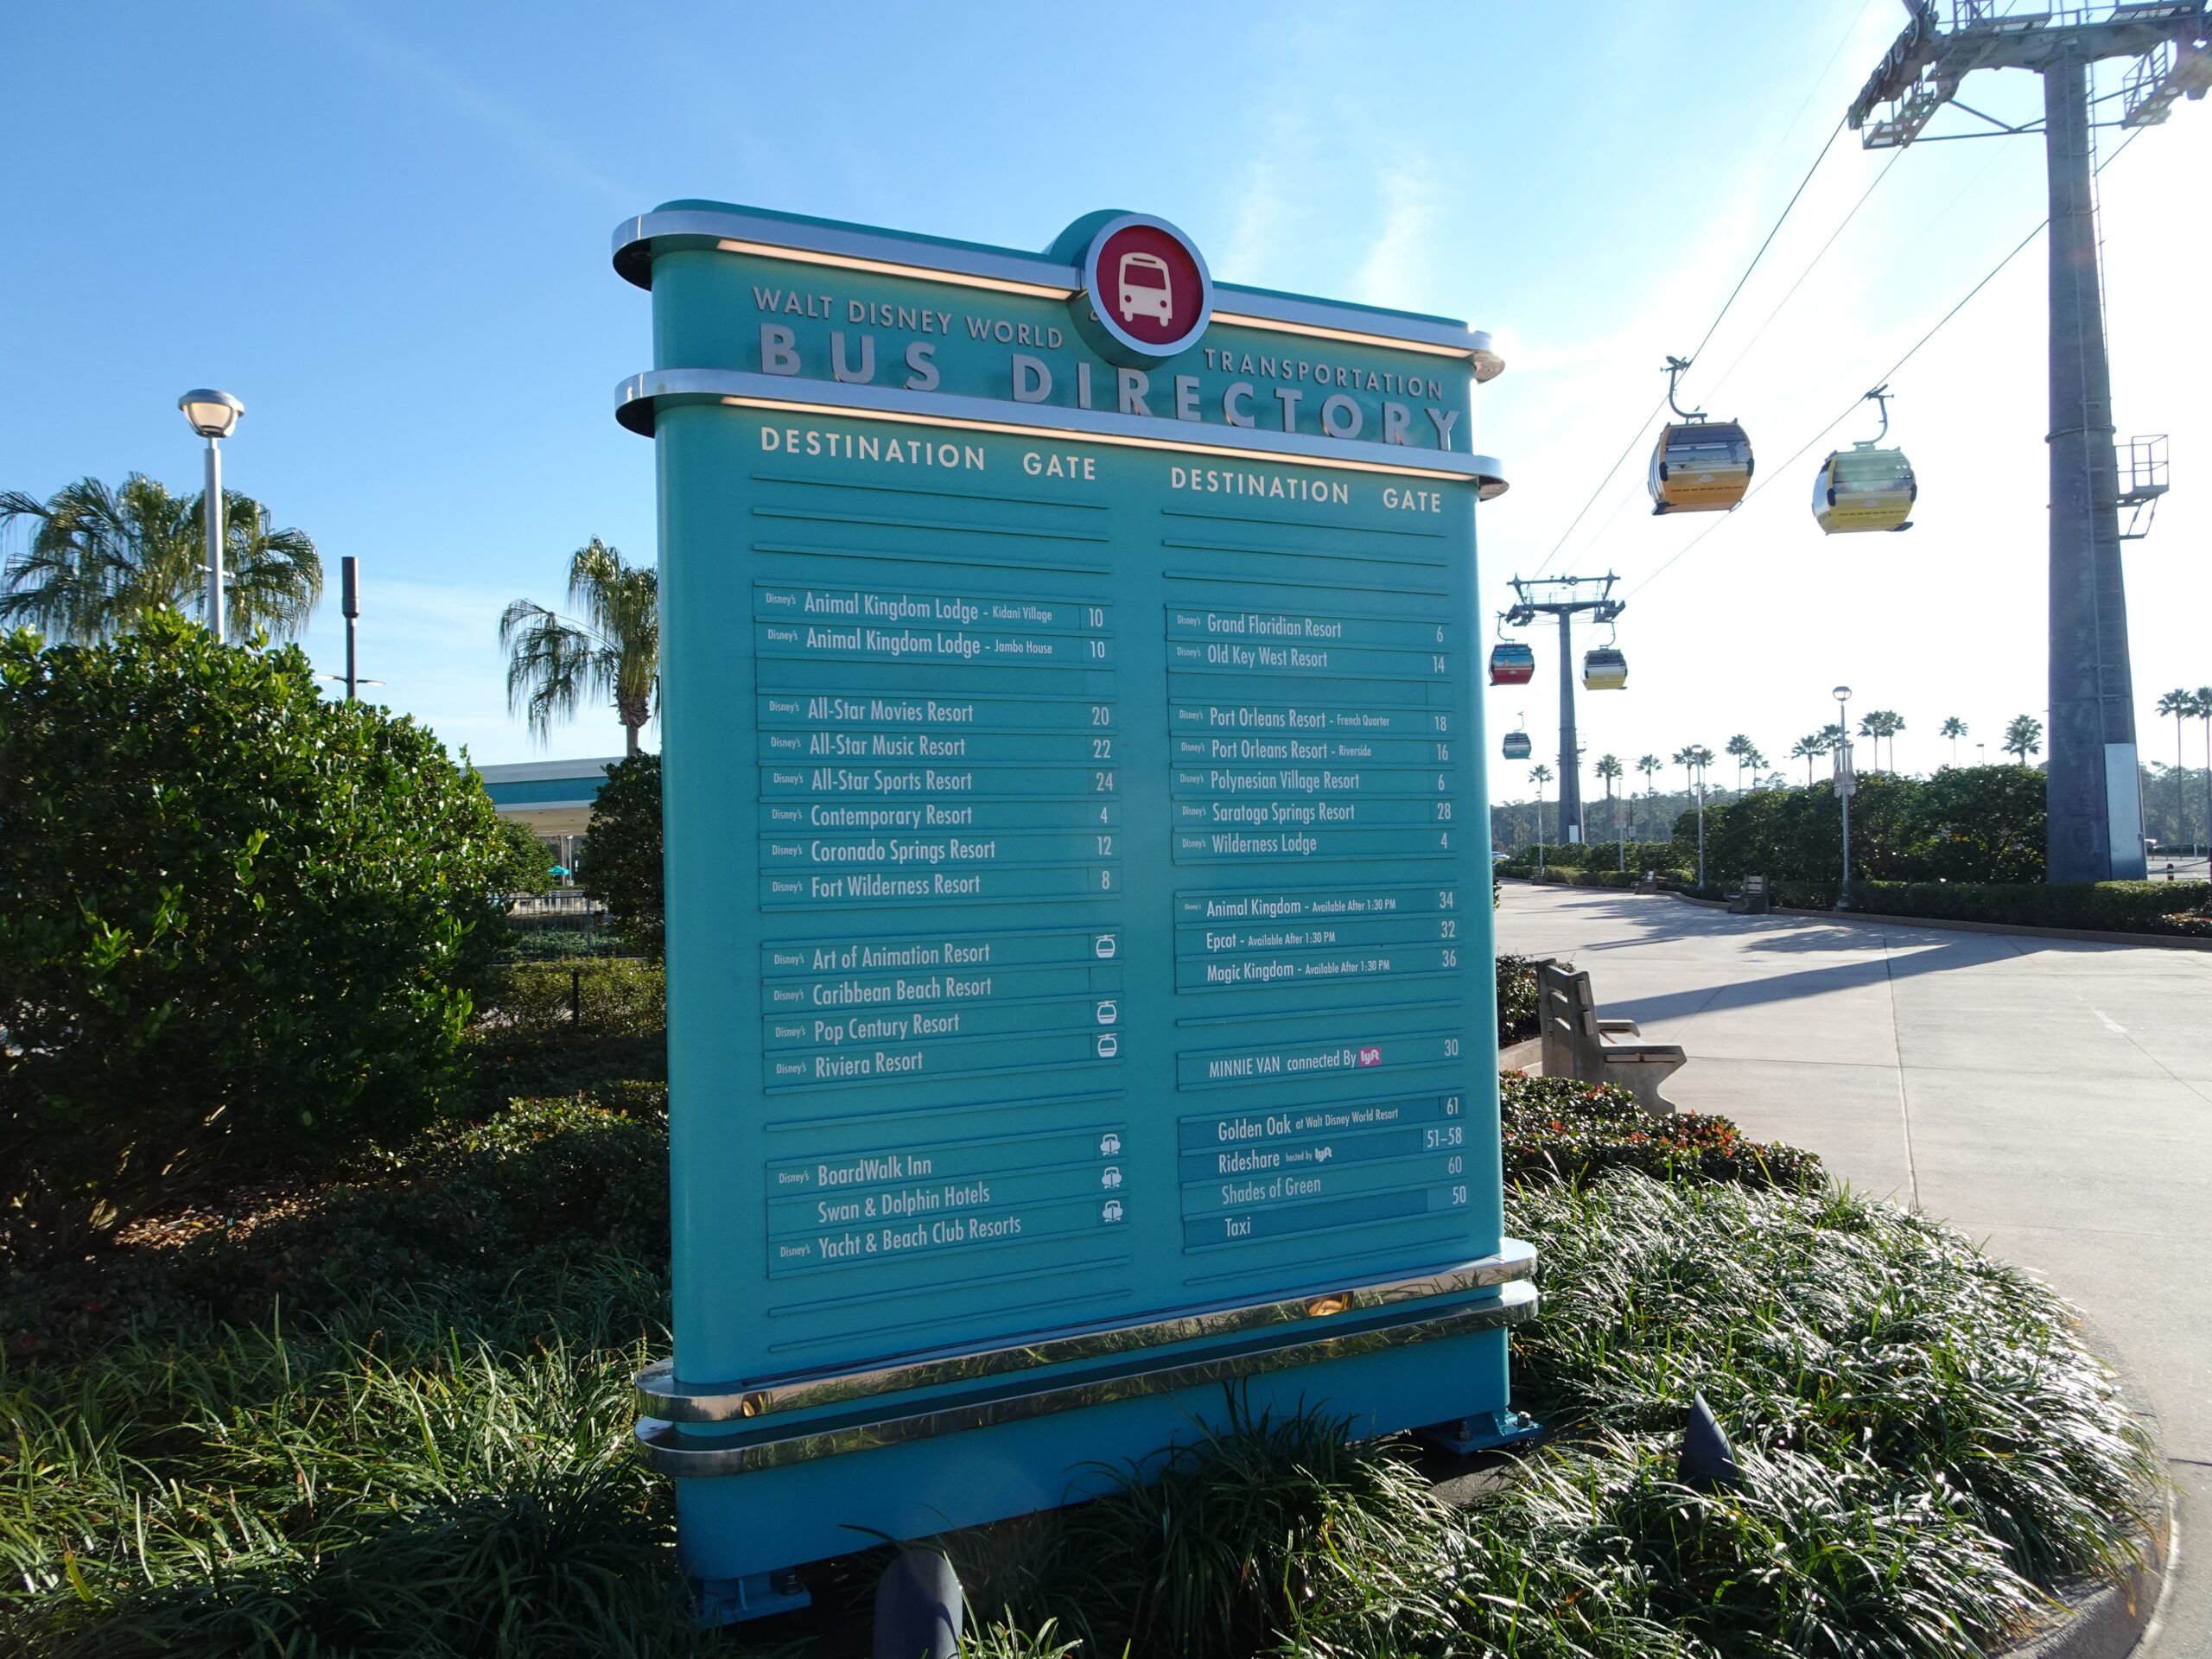 Panel autobuses de Disney World